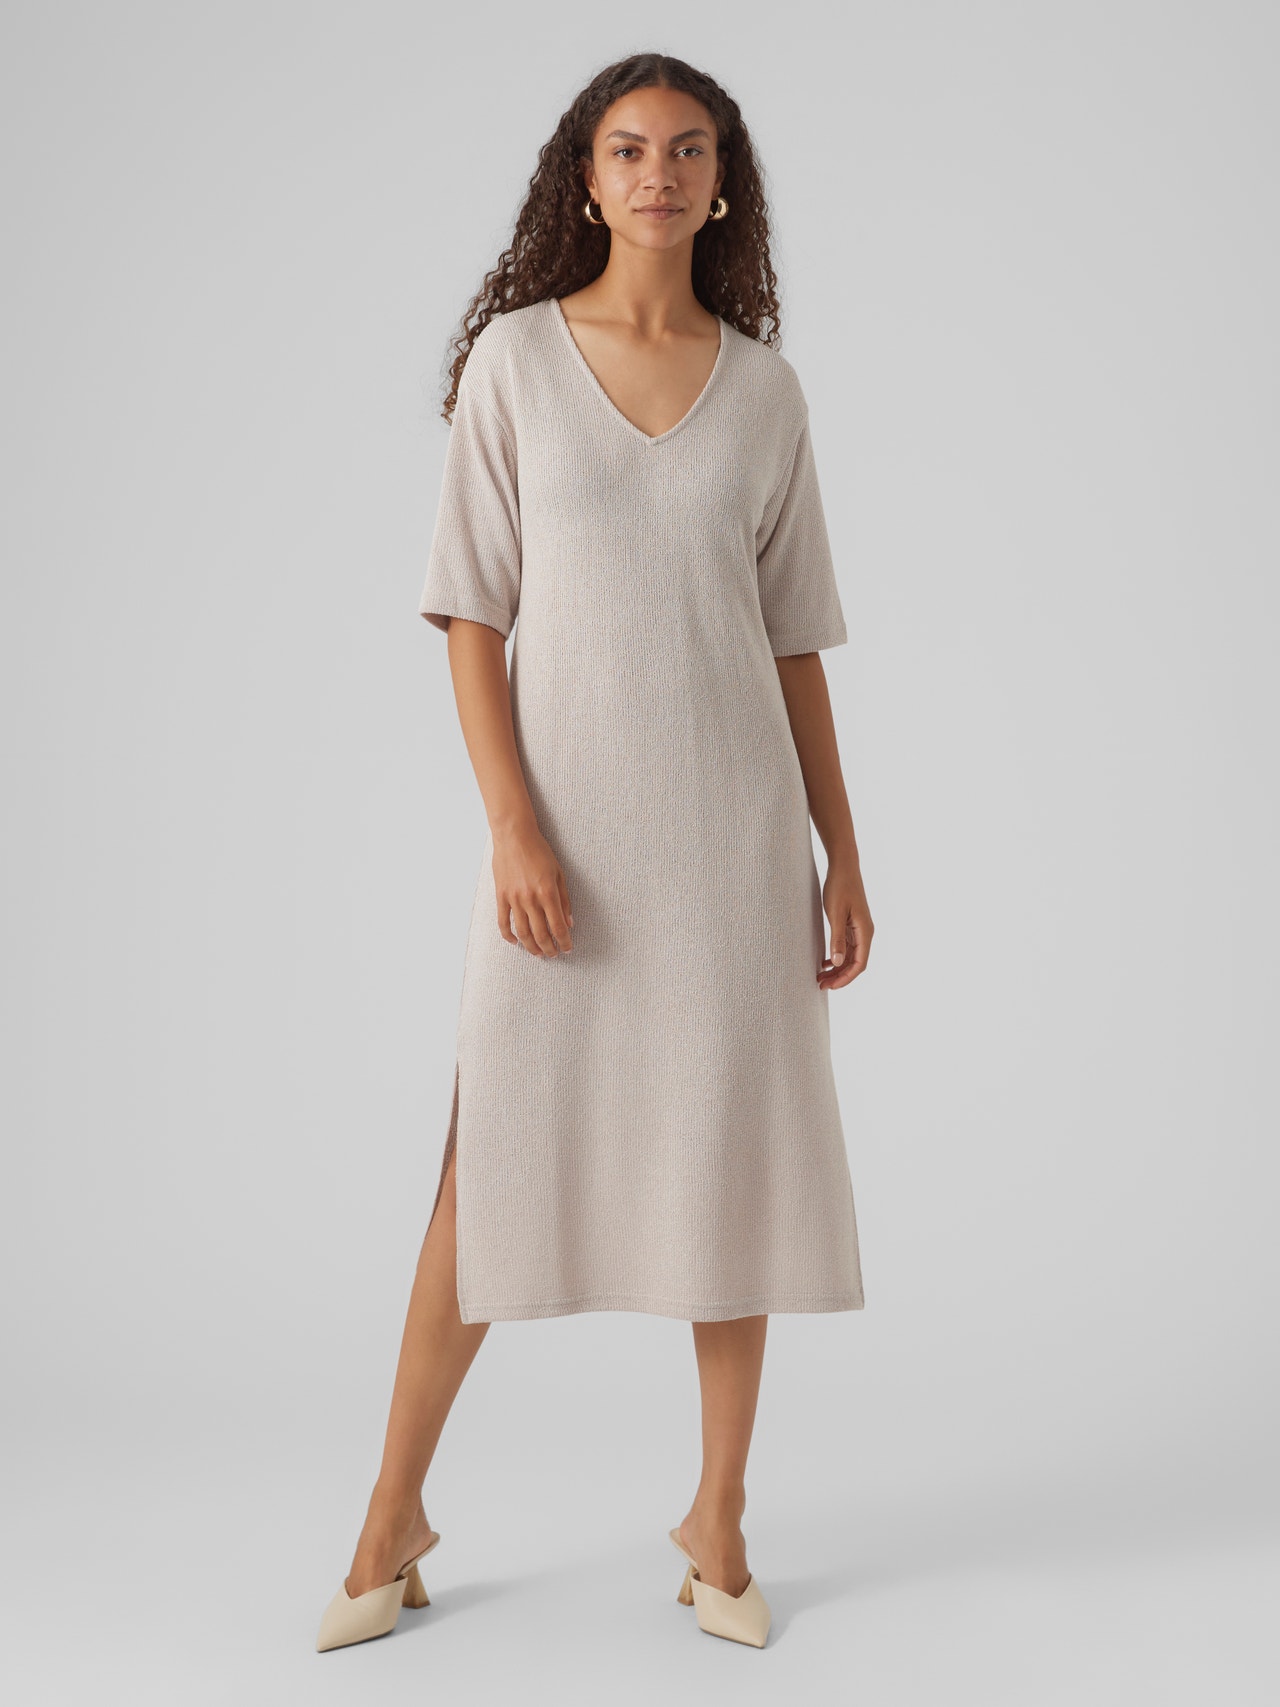 Vero Moda VMEDDIE Lange jurk -Oatmeal - 10300284